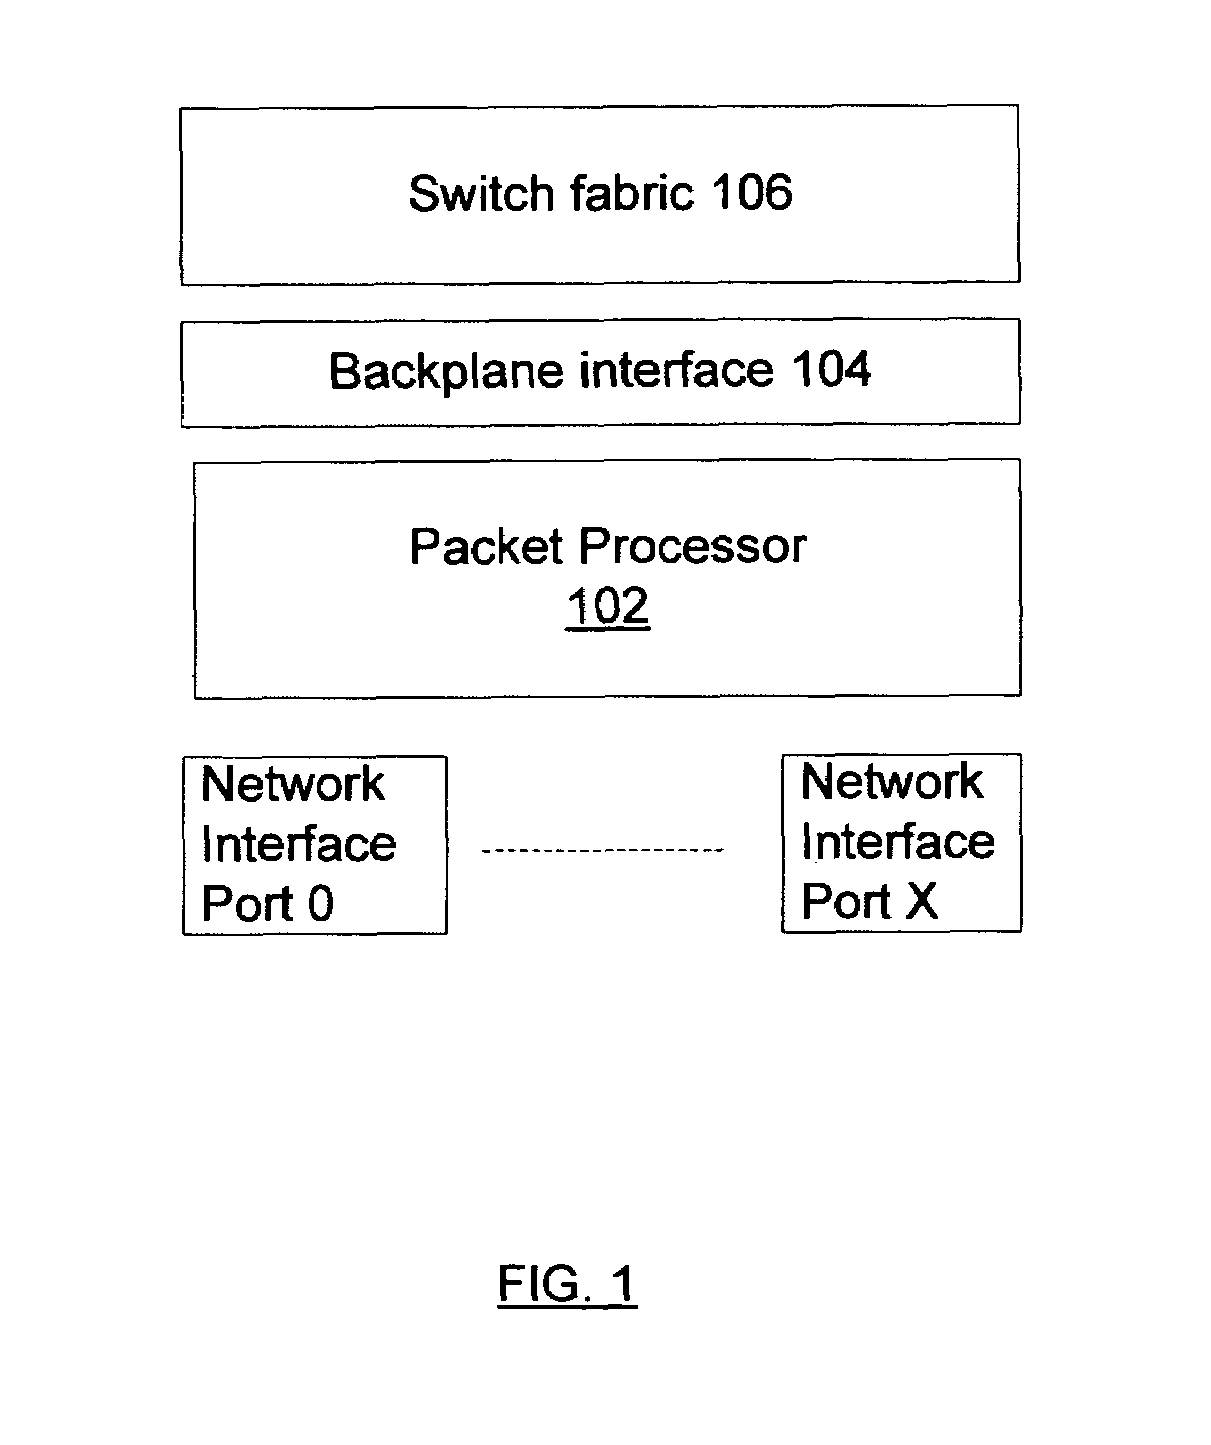 Techniques to manage a flow cache